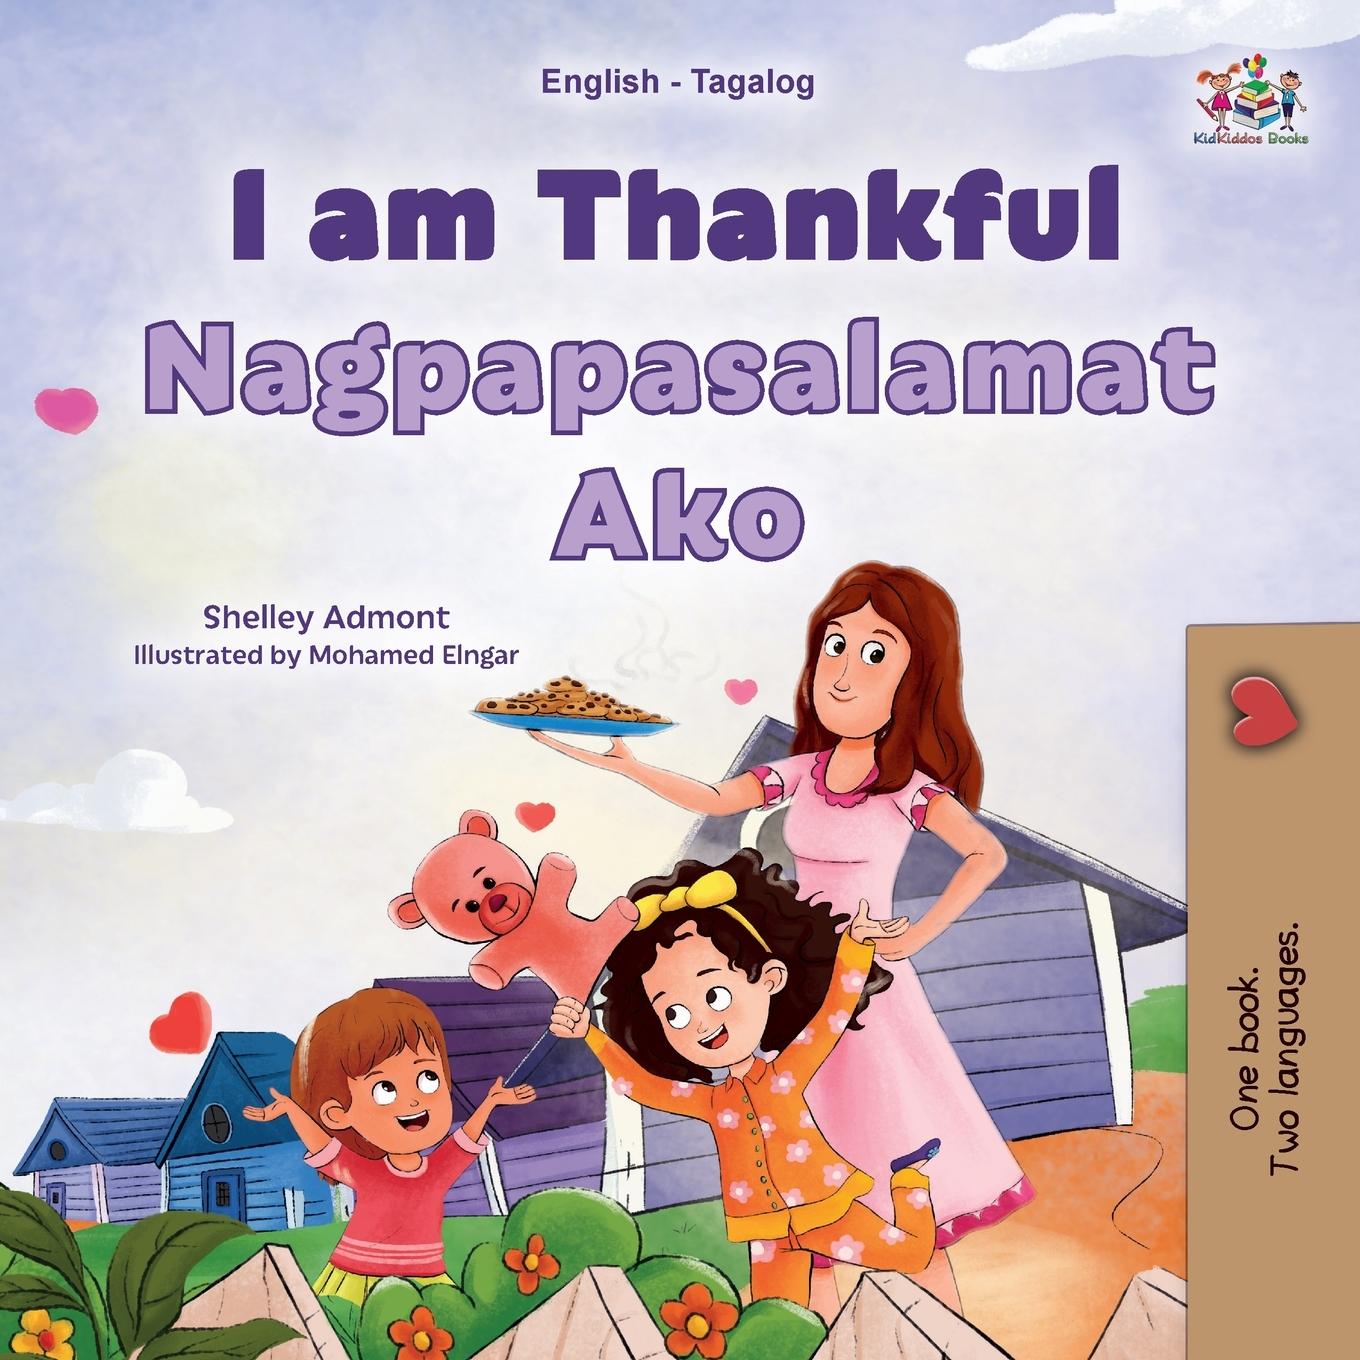 Book I am Thankful (English Tagalog Bilingual Children's Book) Kidkiddos Books